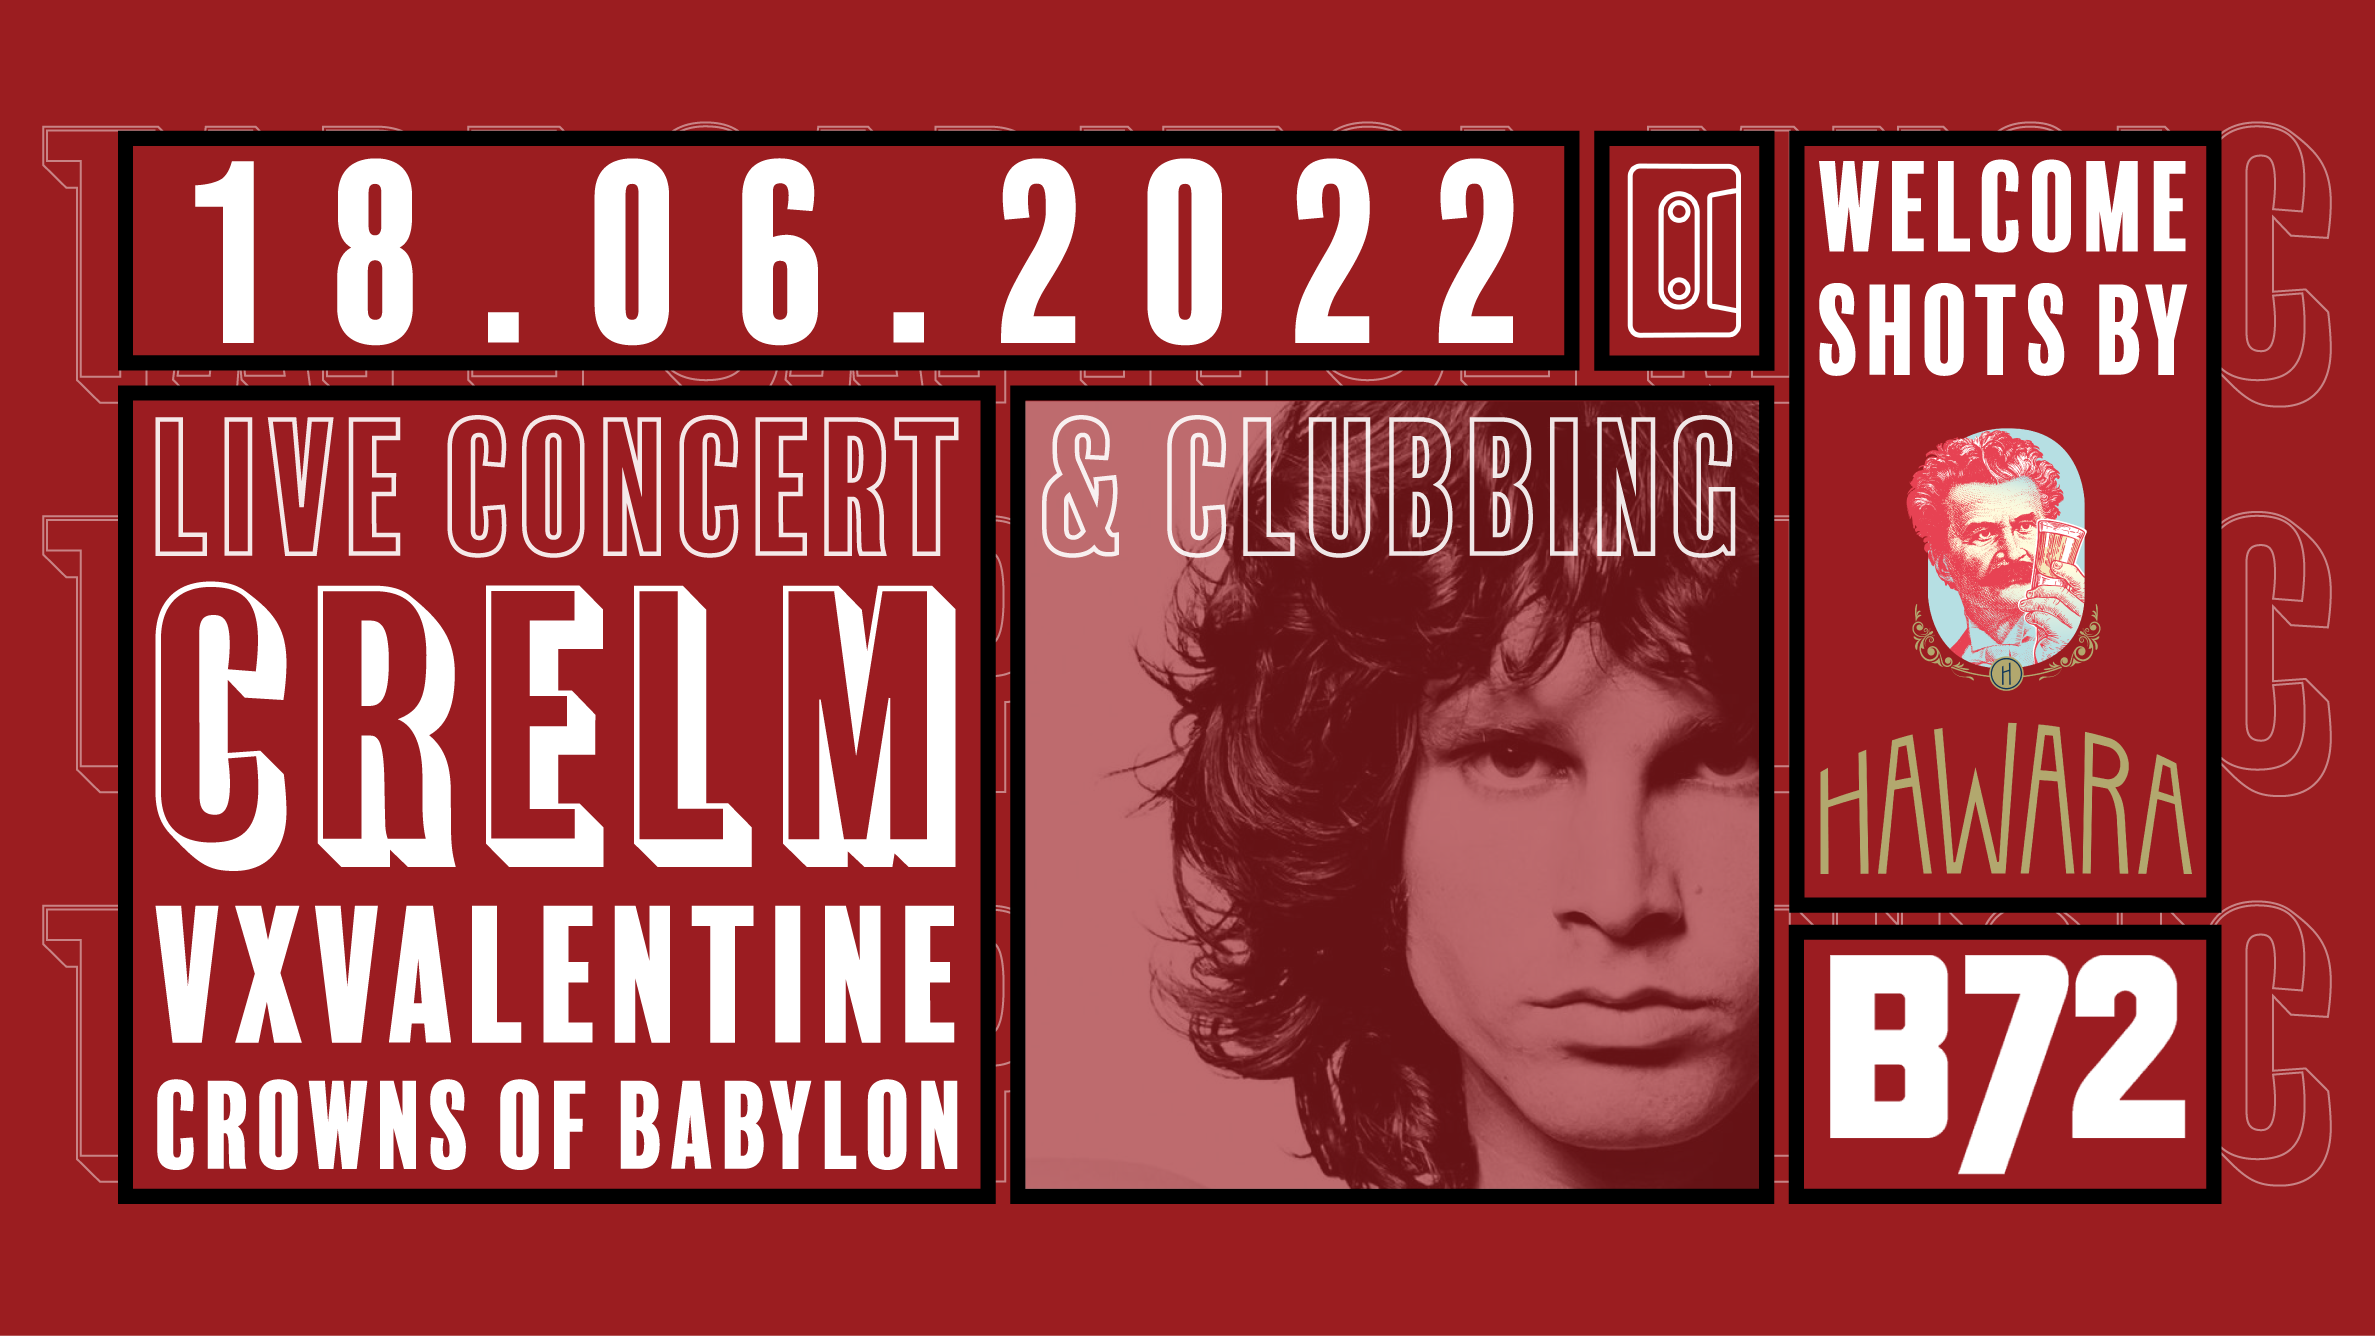 CRELM / VXVALENTINE / CROWNS OF BABYLON am 18. June 2022 @ B72.